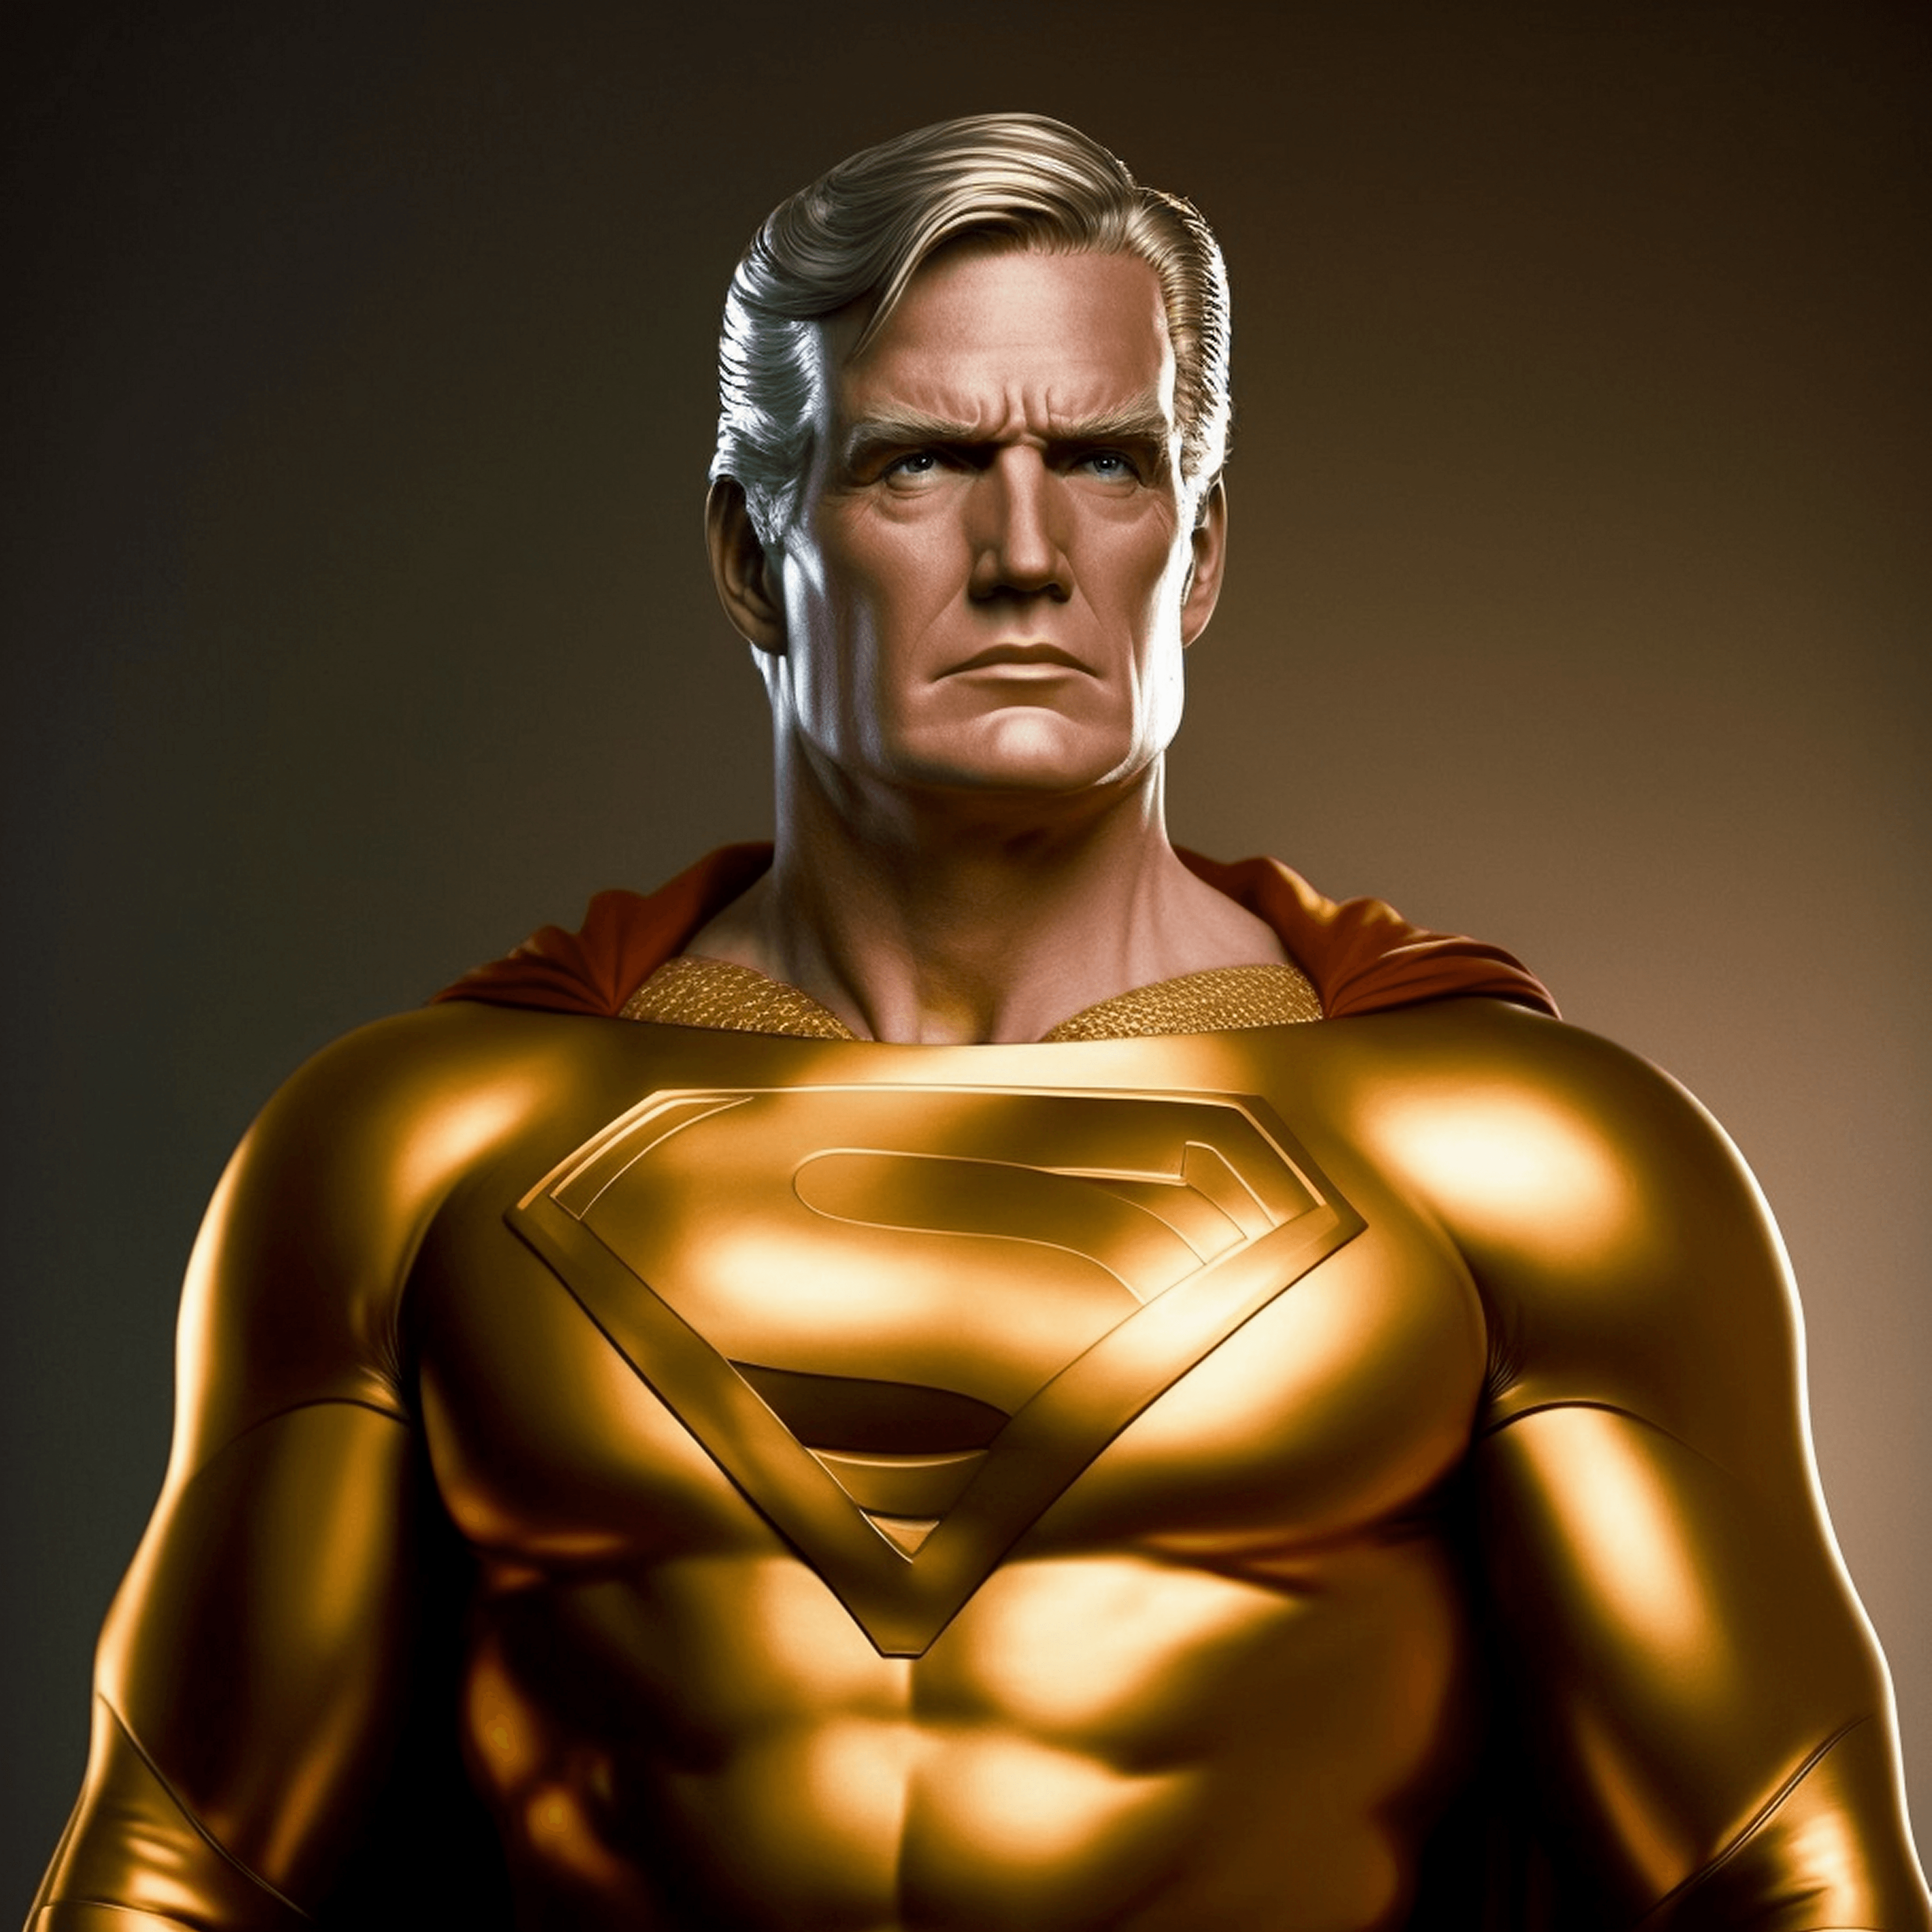 Superhero Gold No. 6 by Sollog